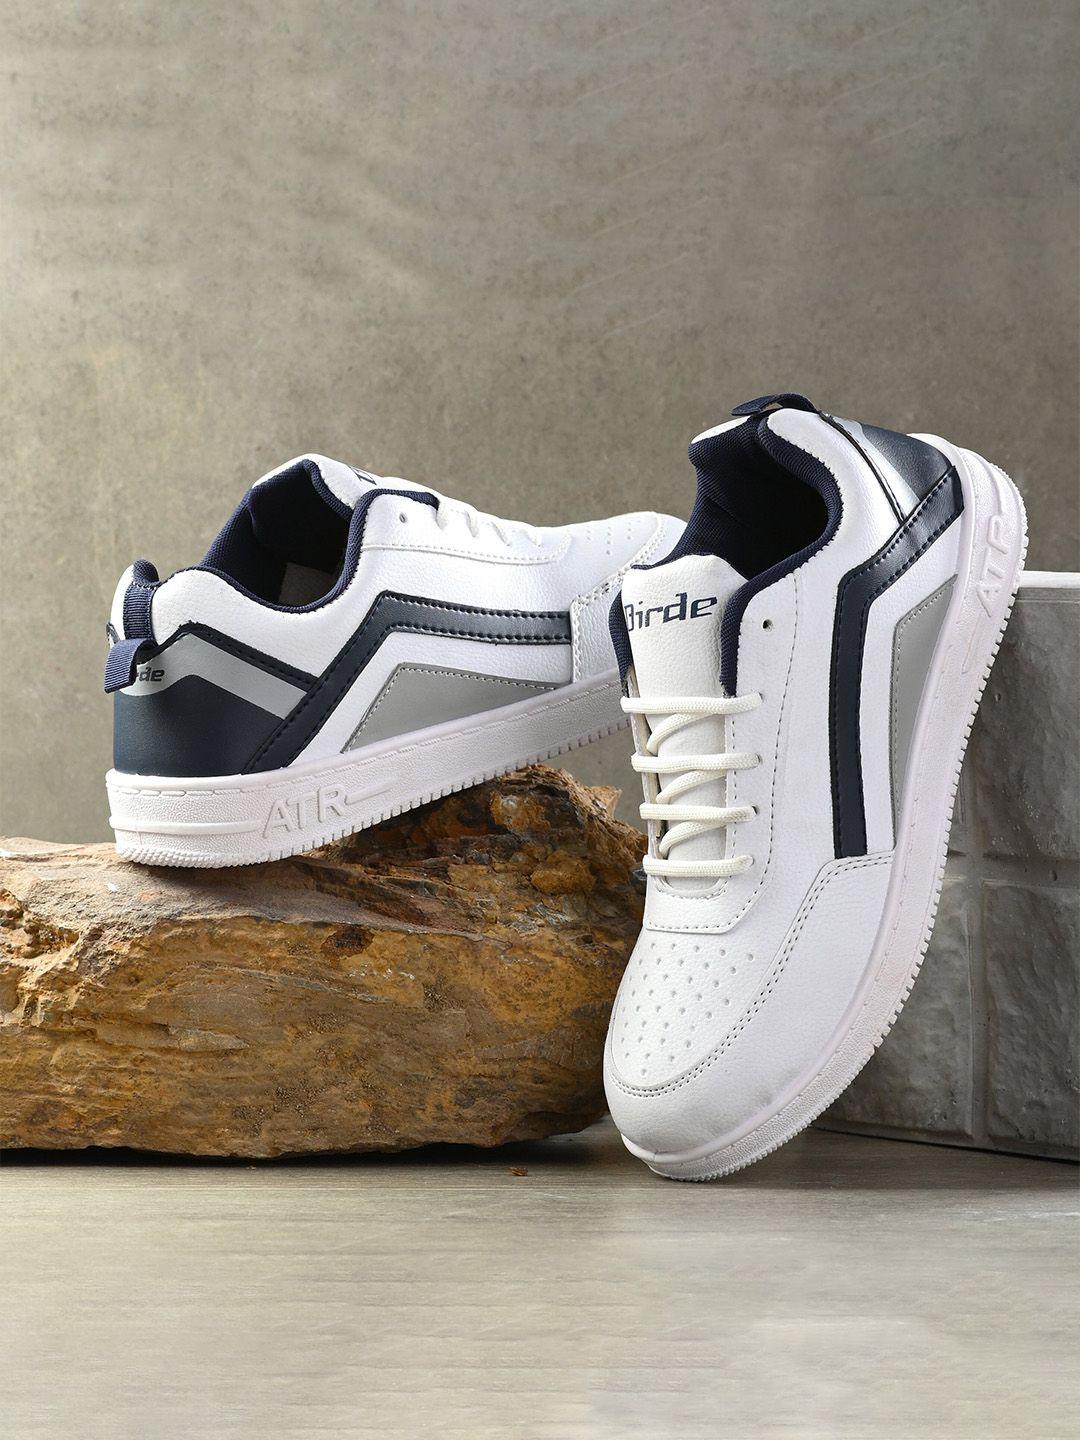 birde-men-white-&-blue-textured-sneakers